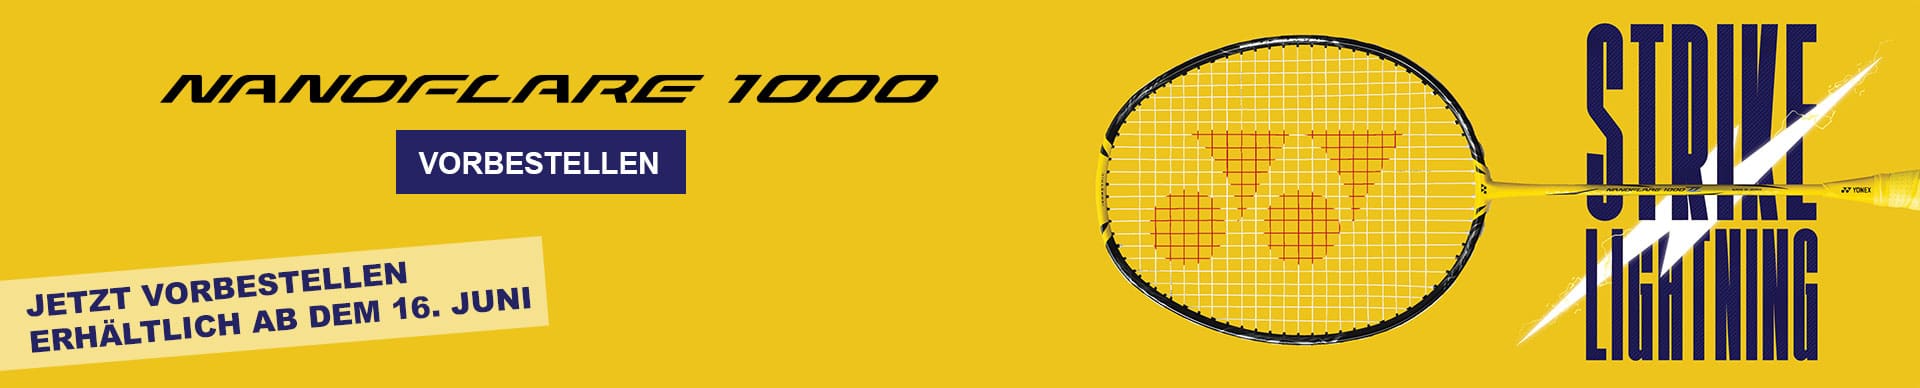 yonex-nanoflare-1000-badmintonschlaeger-kaufen-pre-order